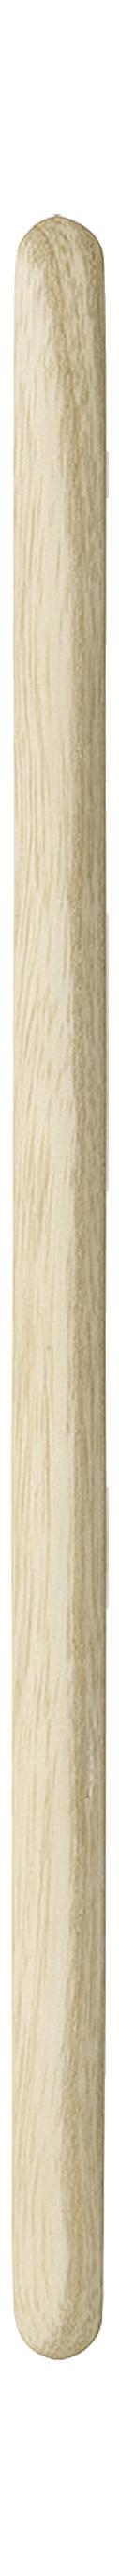 Rig Tig Easy Wooden Tasting Rod